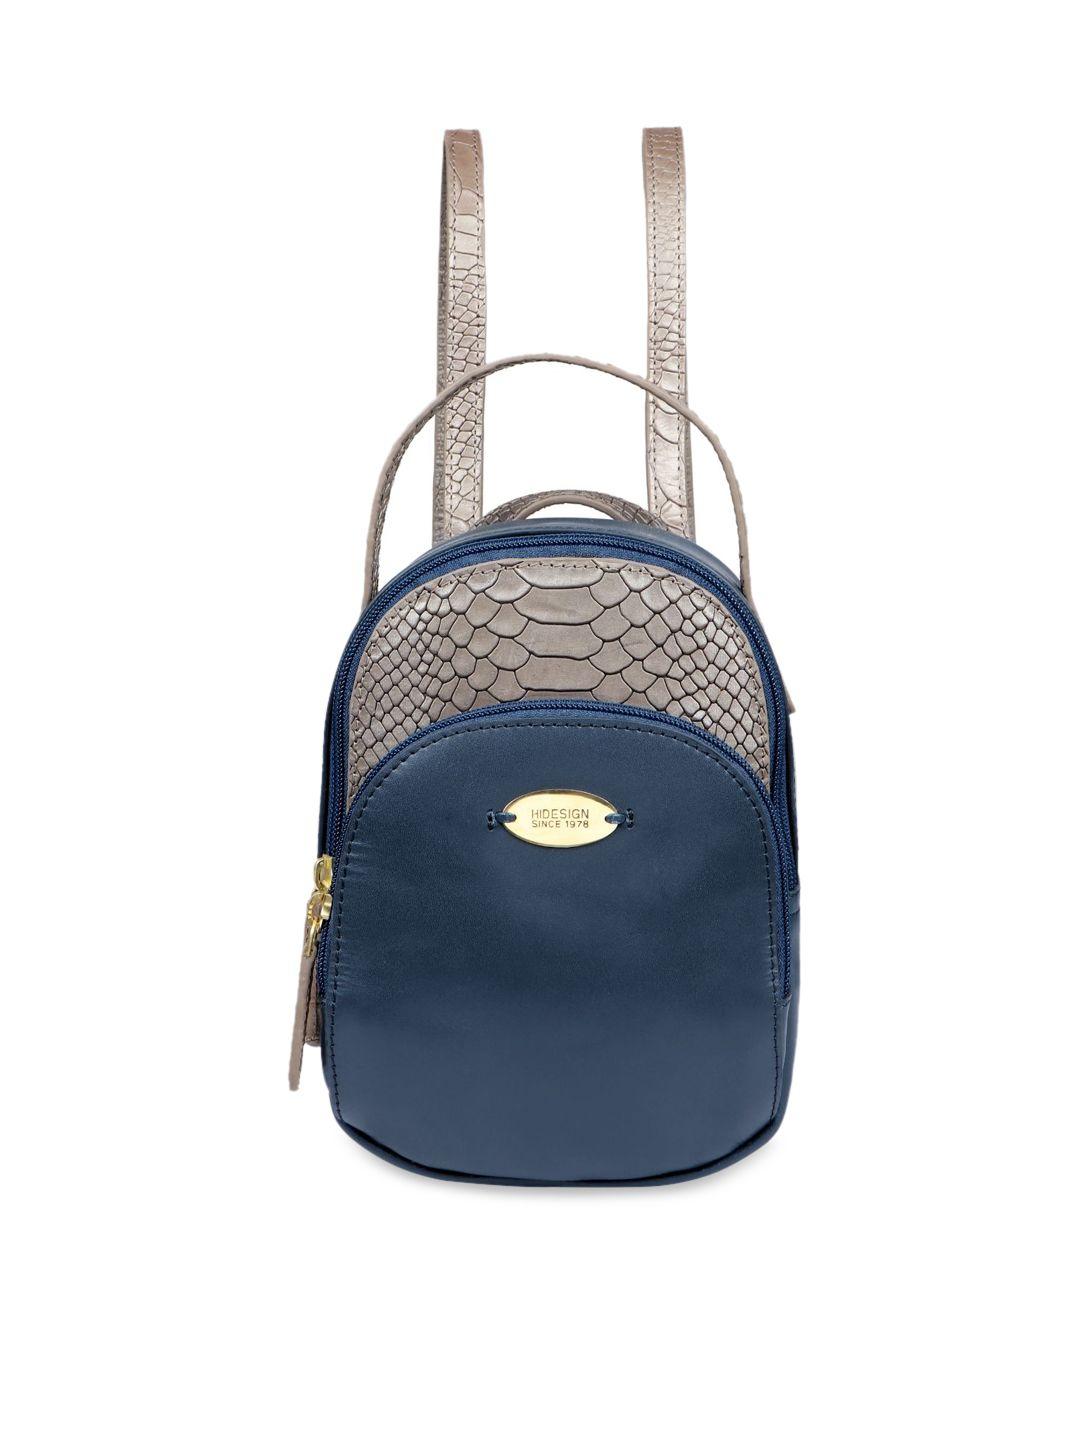 hidesign-women-blue-&-grey-colourblocked-animal-printed-backpack